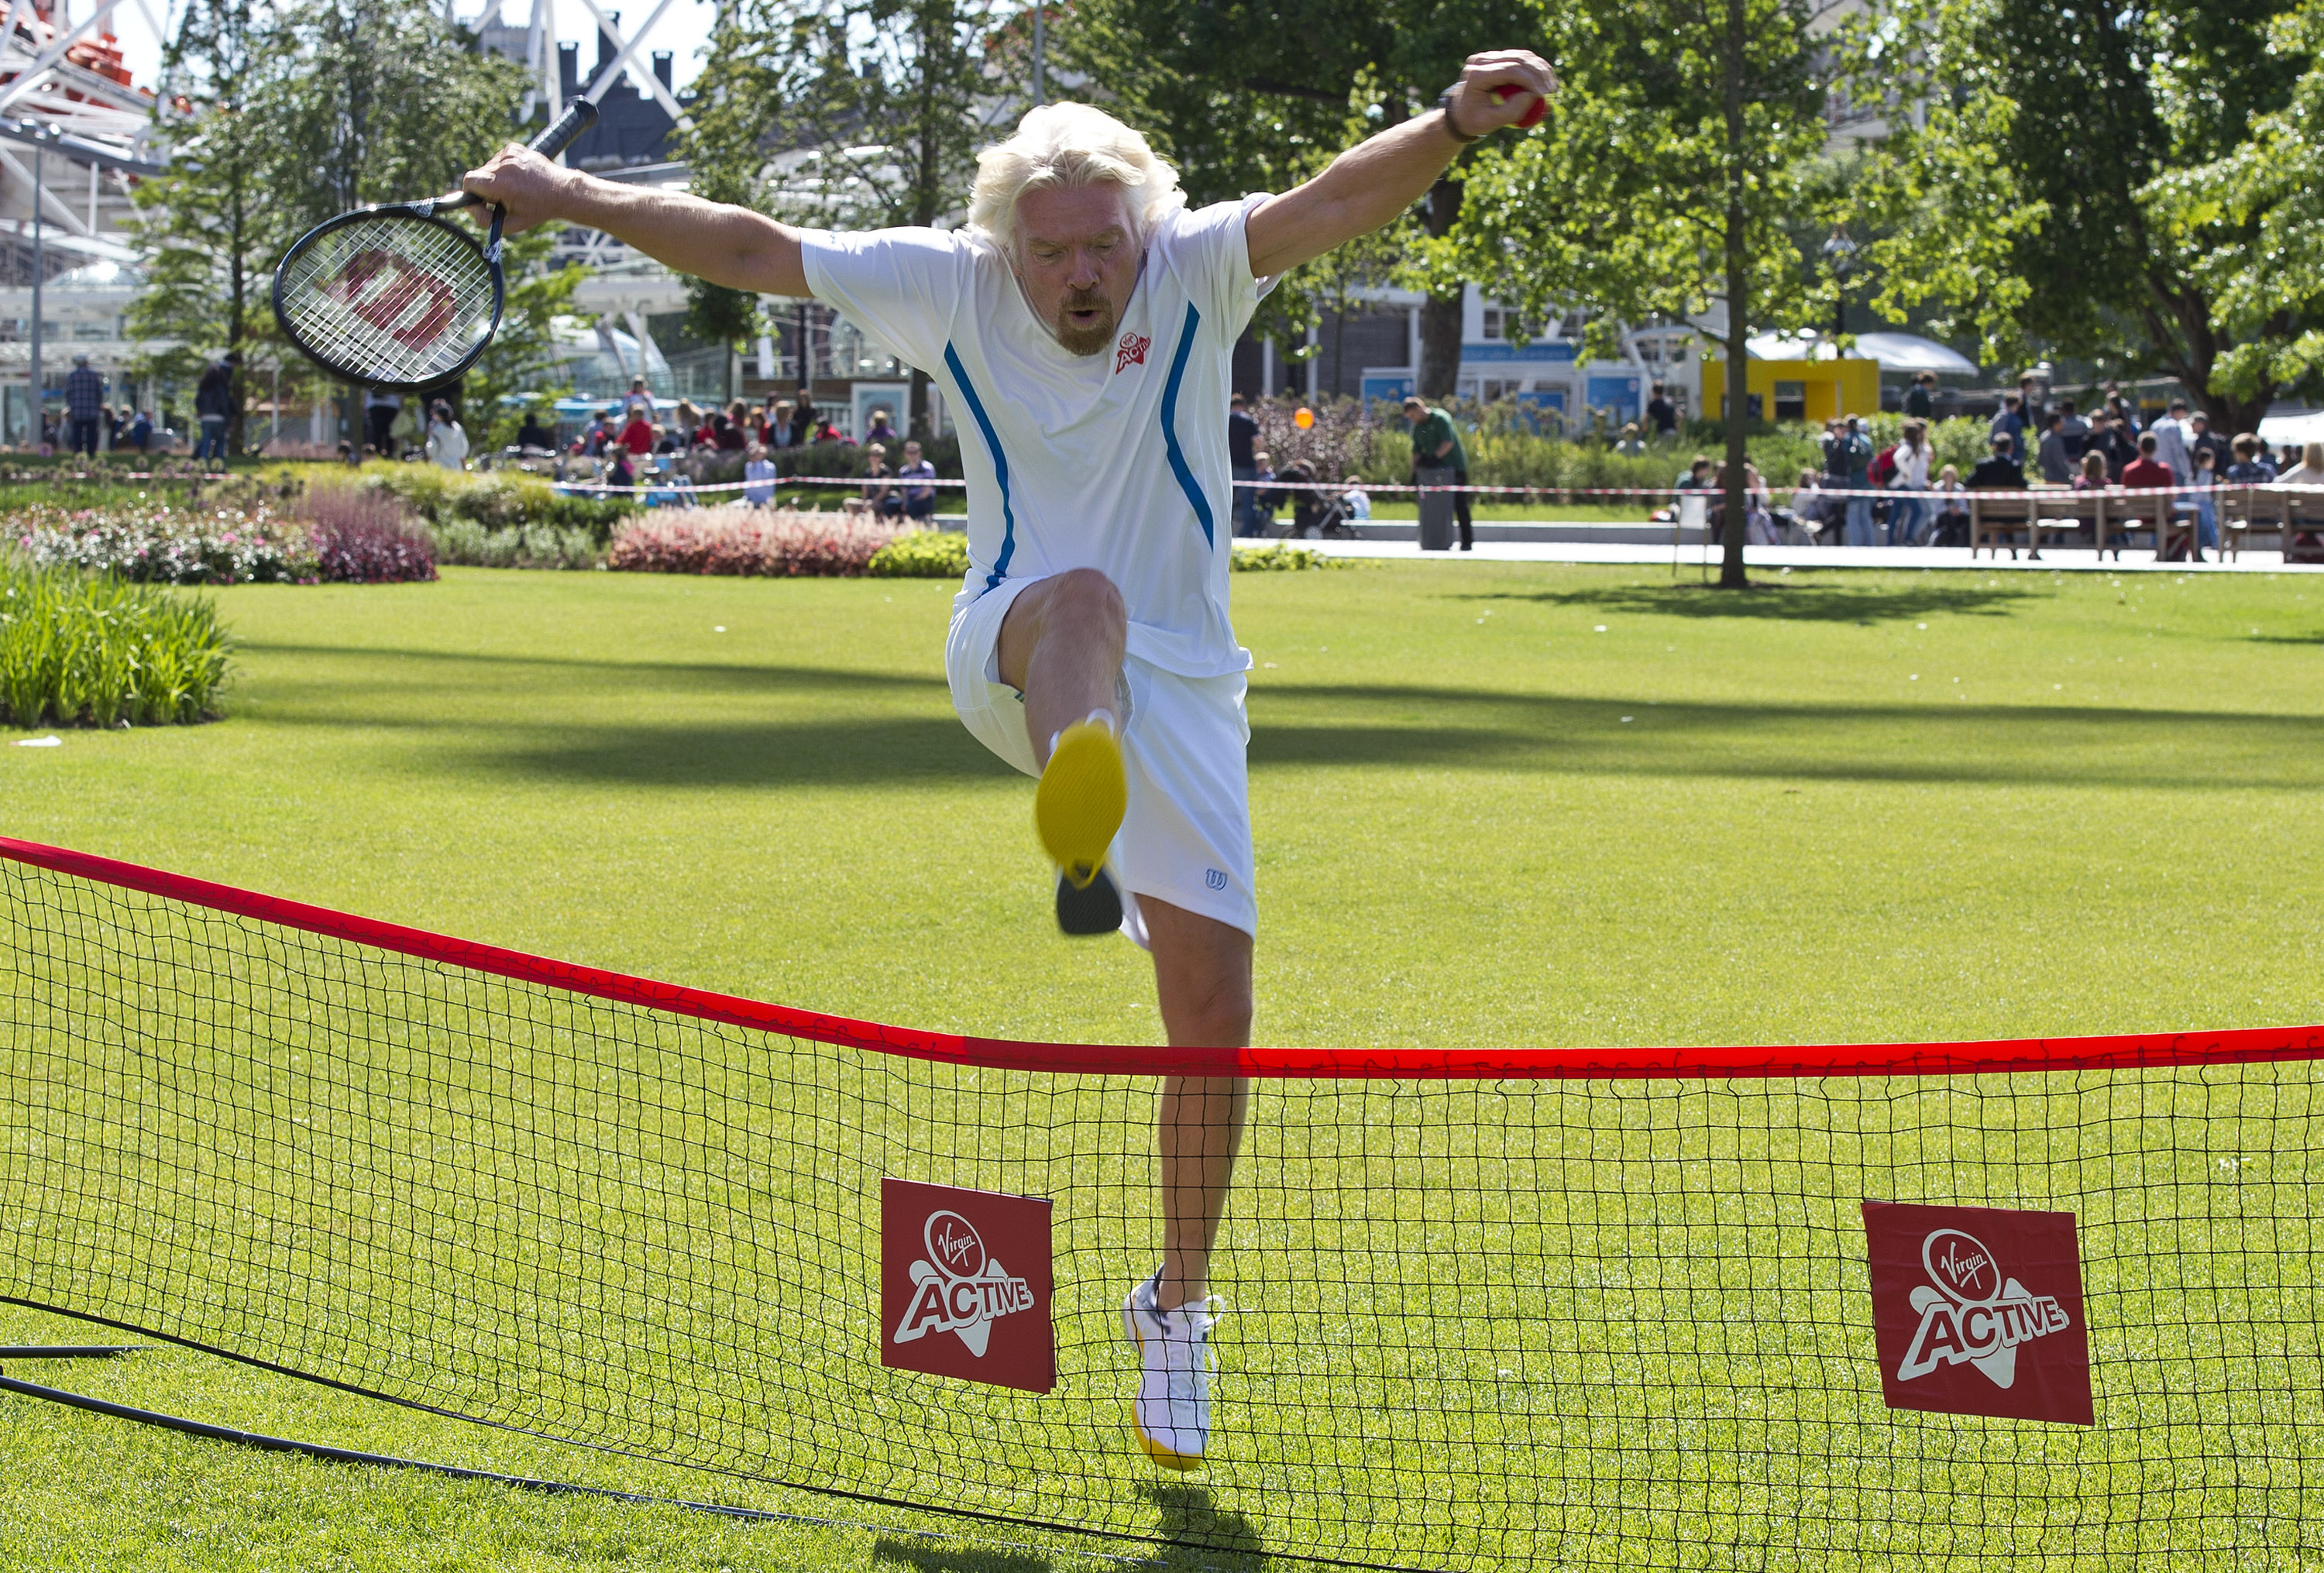 Virgin Active Celebrates The Start Of Wimbledon